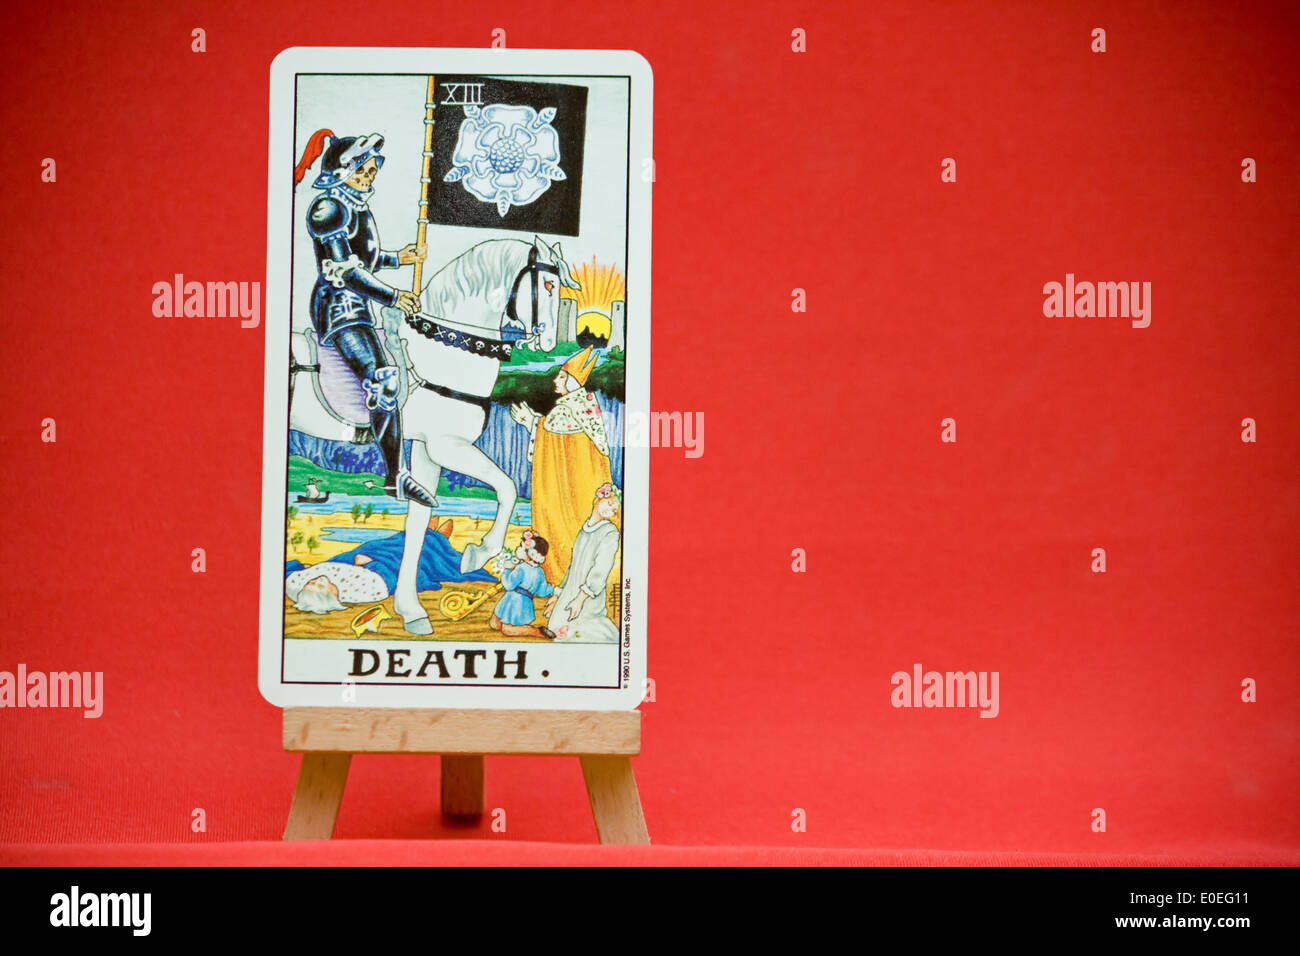 Der Tod. Eine große Arkana-Tarot-Karte aus dem Universal Waite Deck  Stockfotografie - Alamy